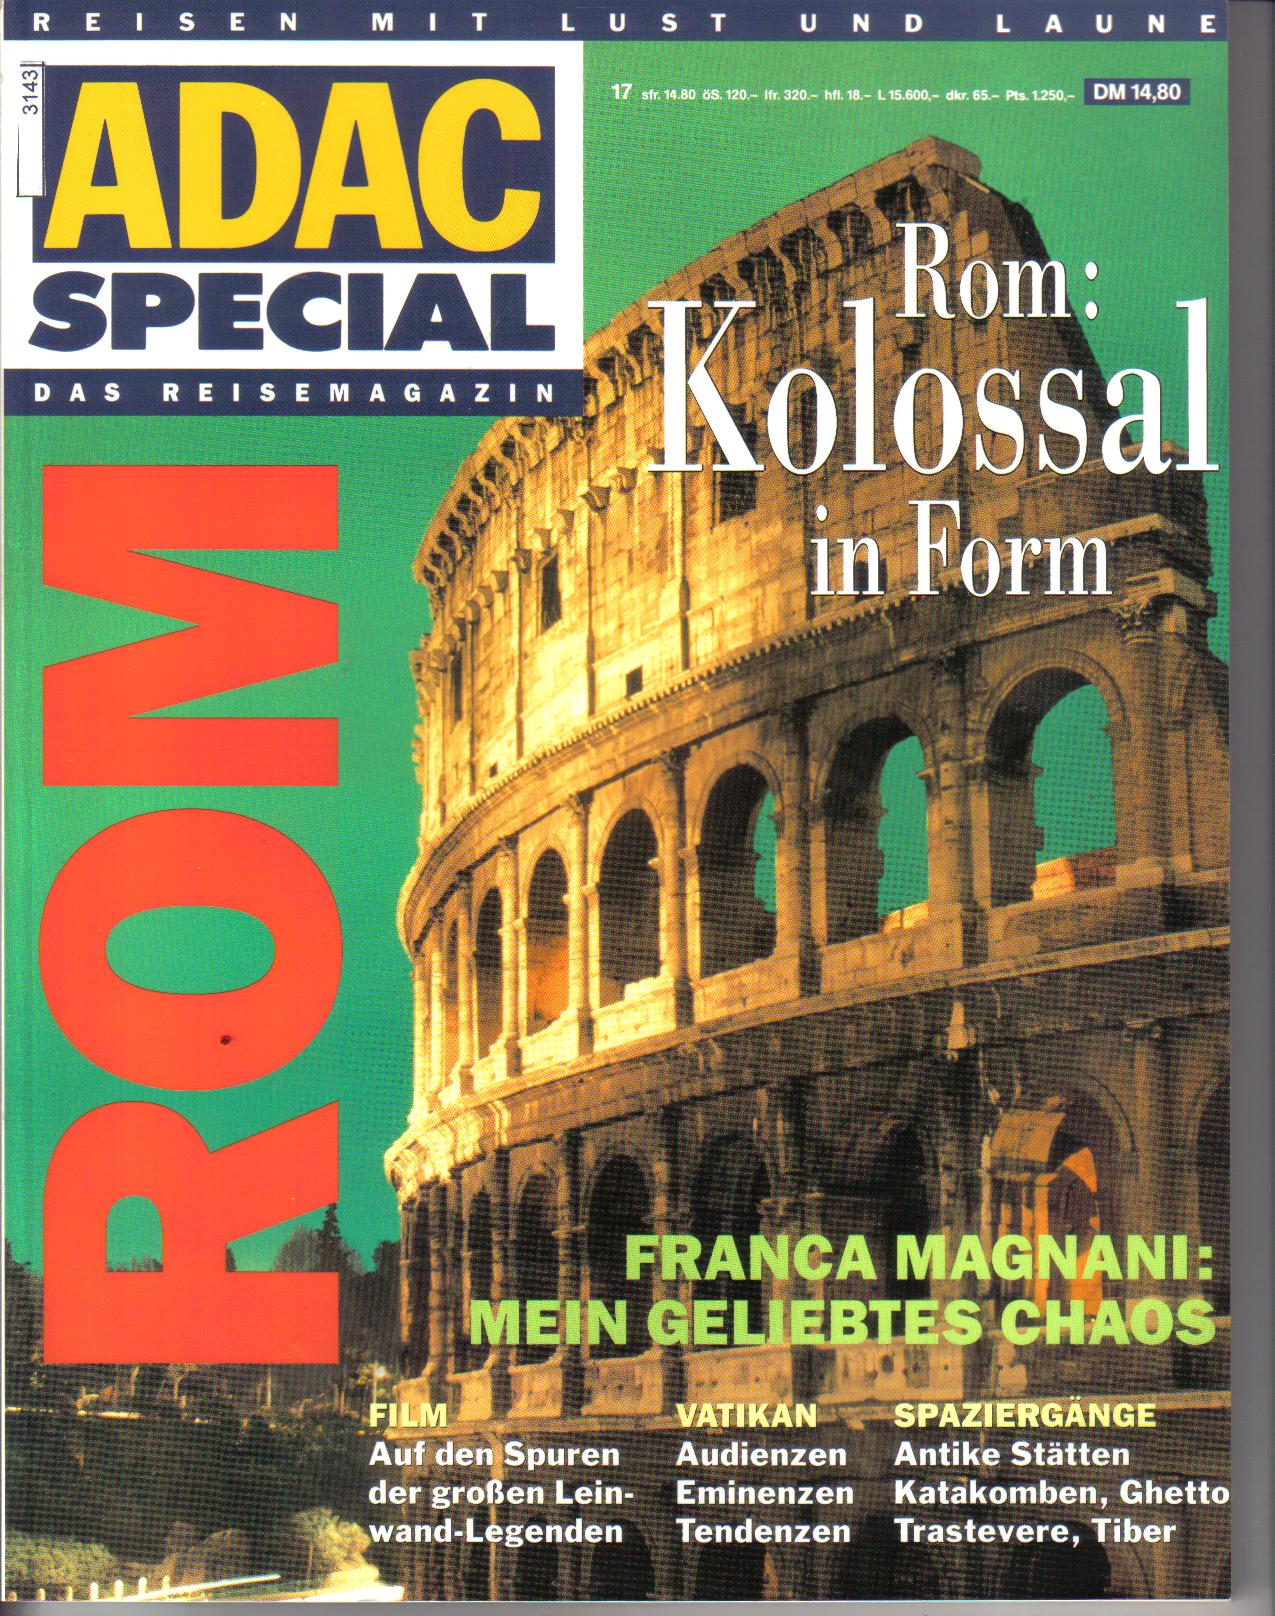 ADAC  Special  das Reisemagazin  ROM